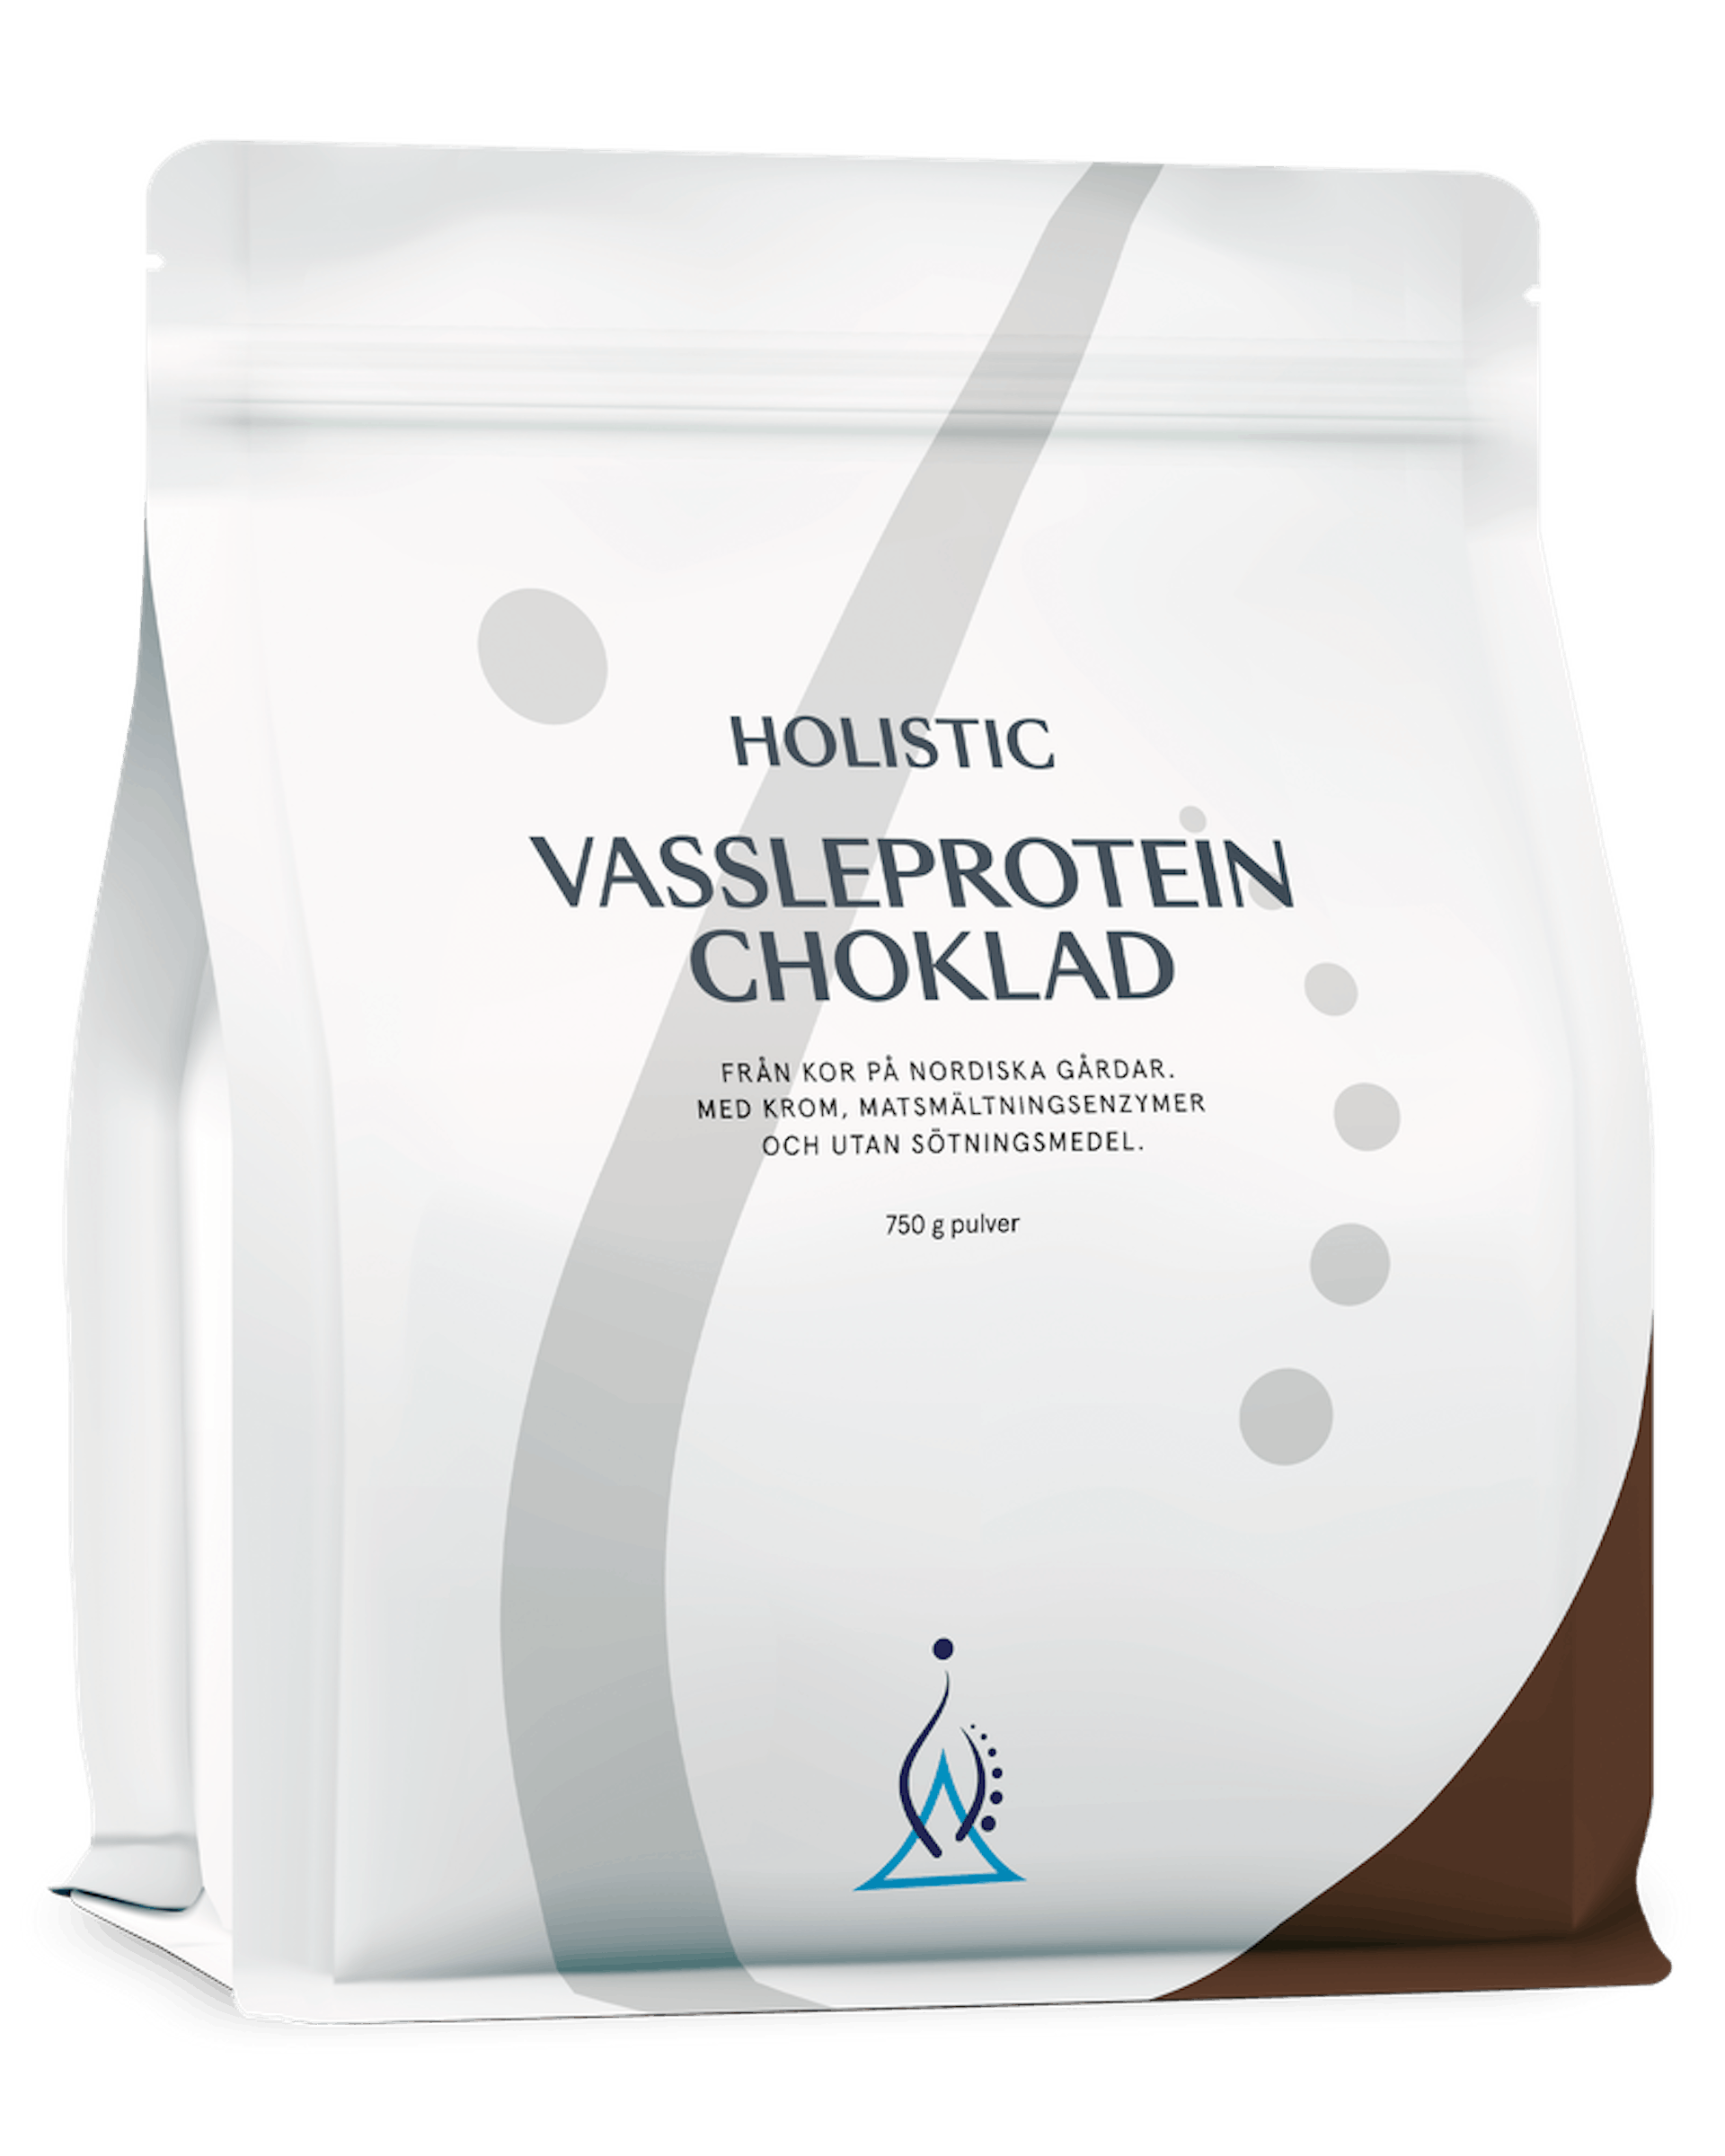 Vassleprotein choklad, 750 g (1 av 1)